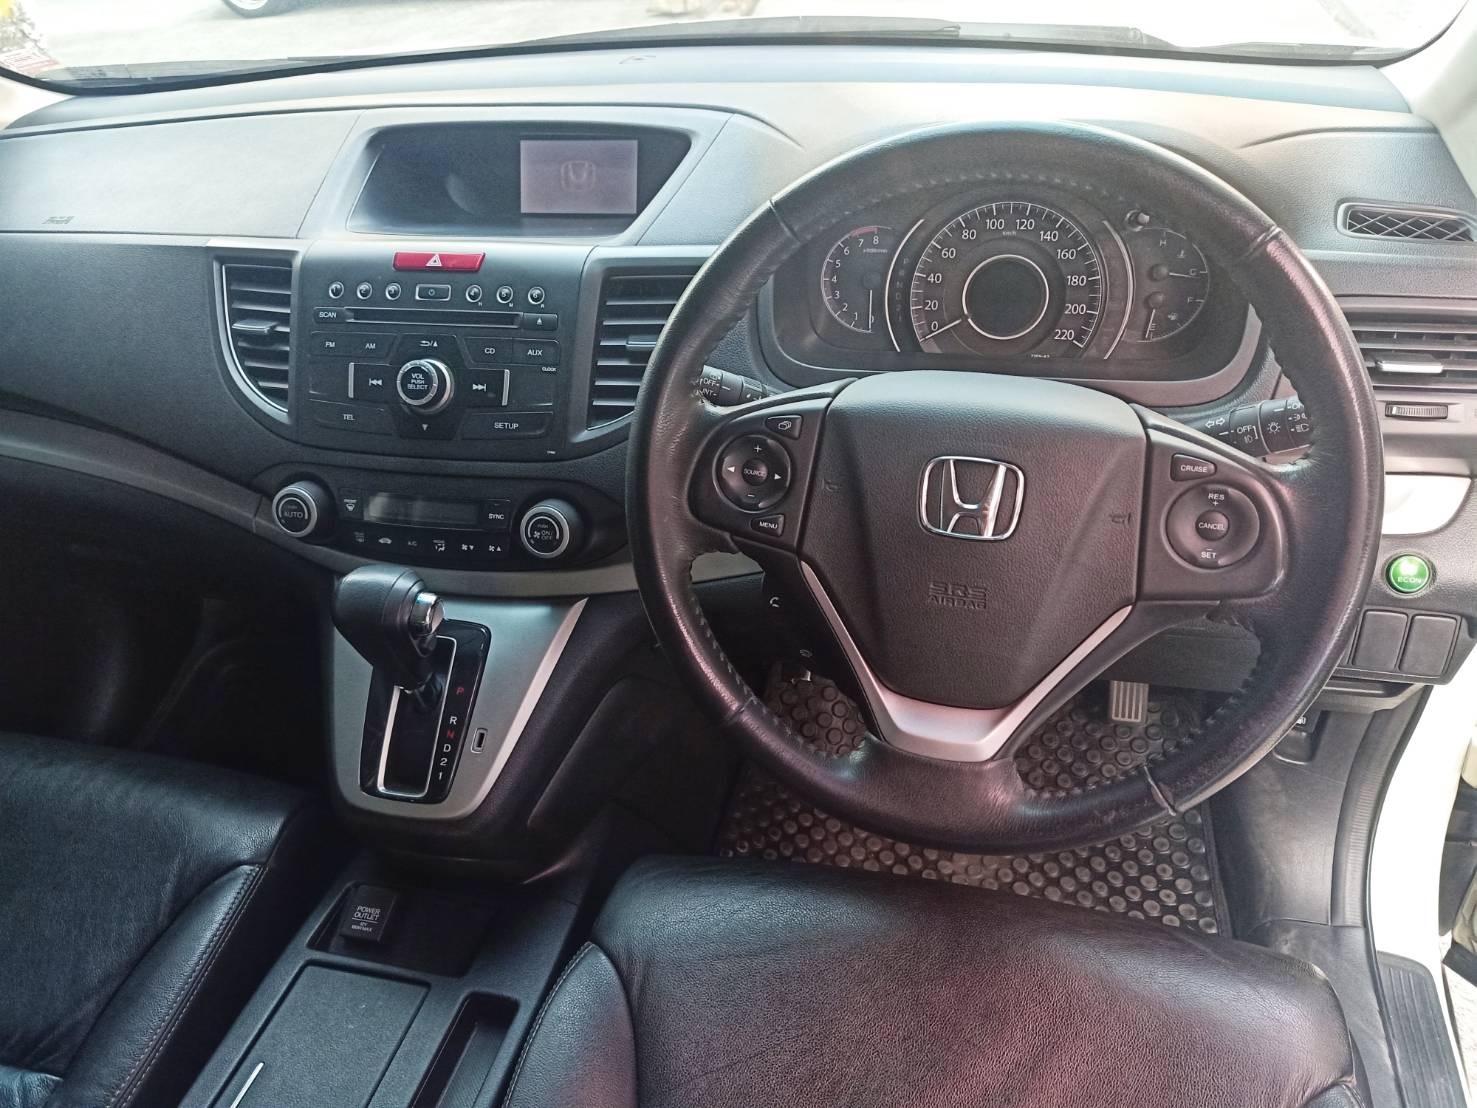 Honda CR-V ปี 2014 สีขาว